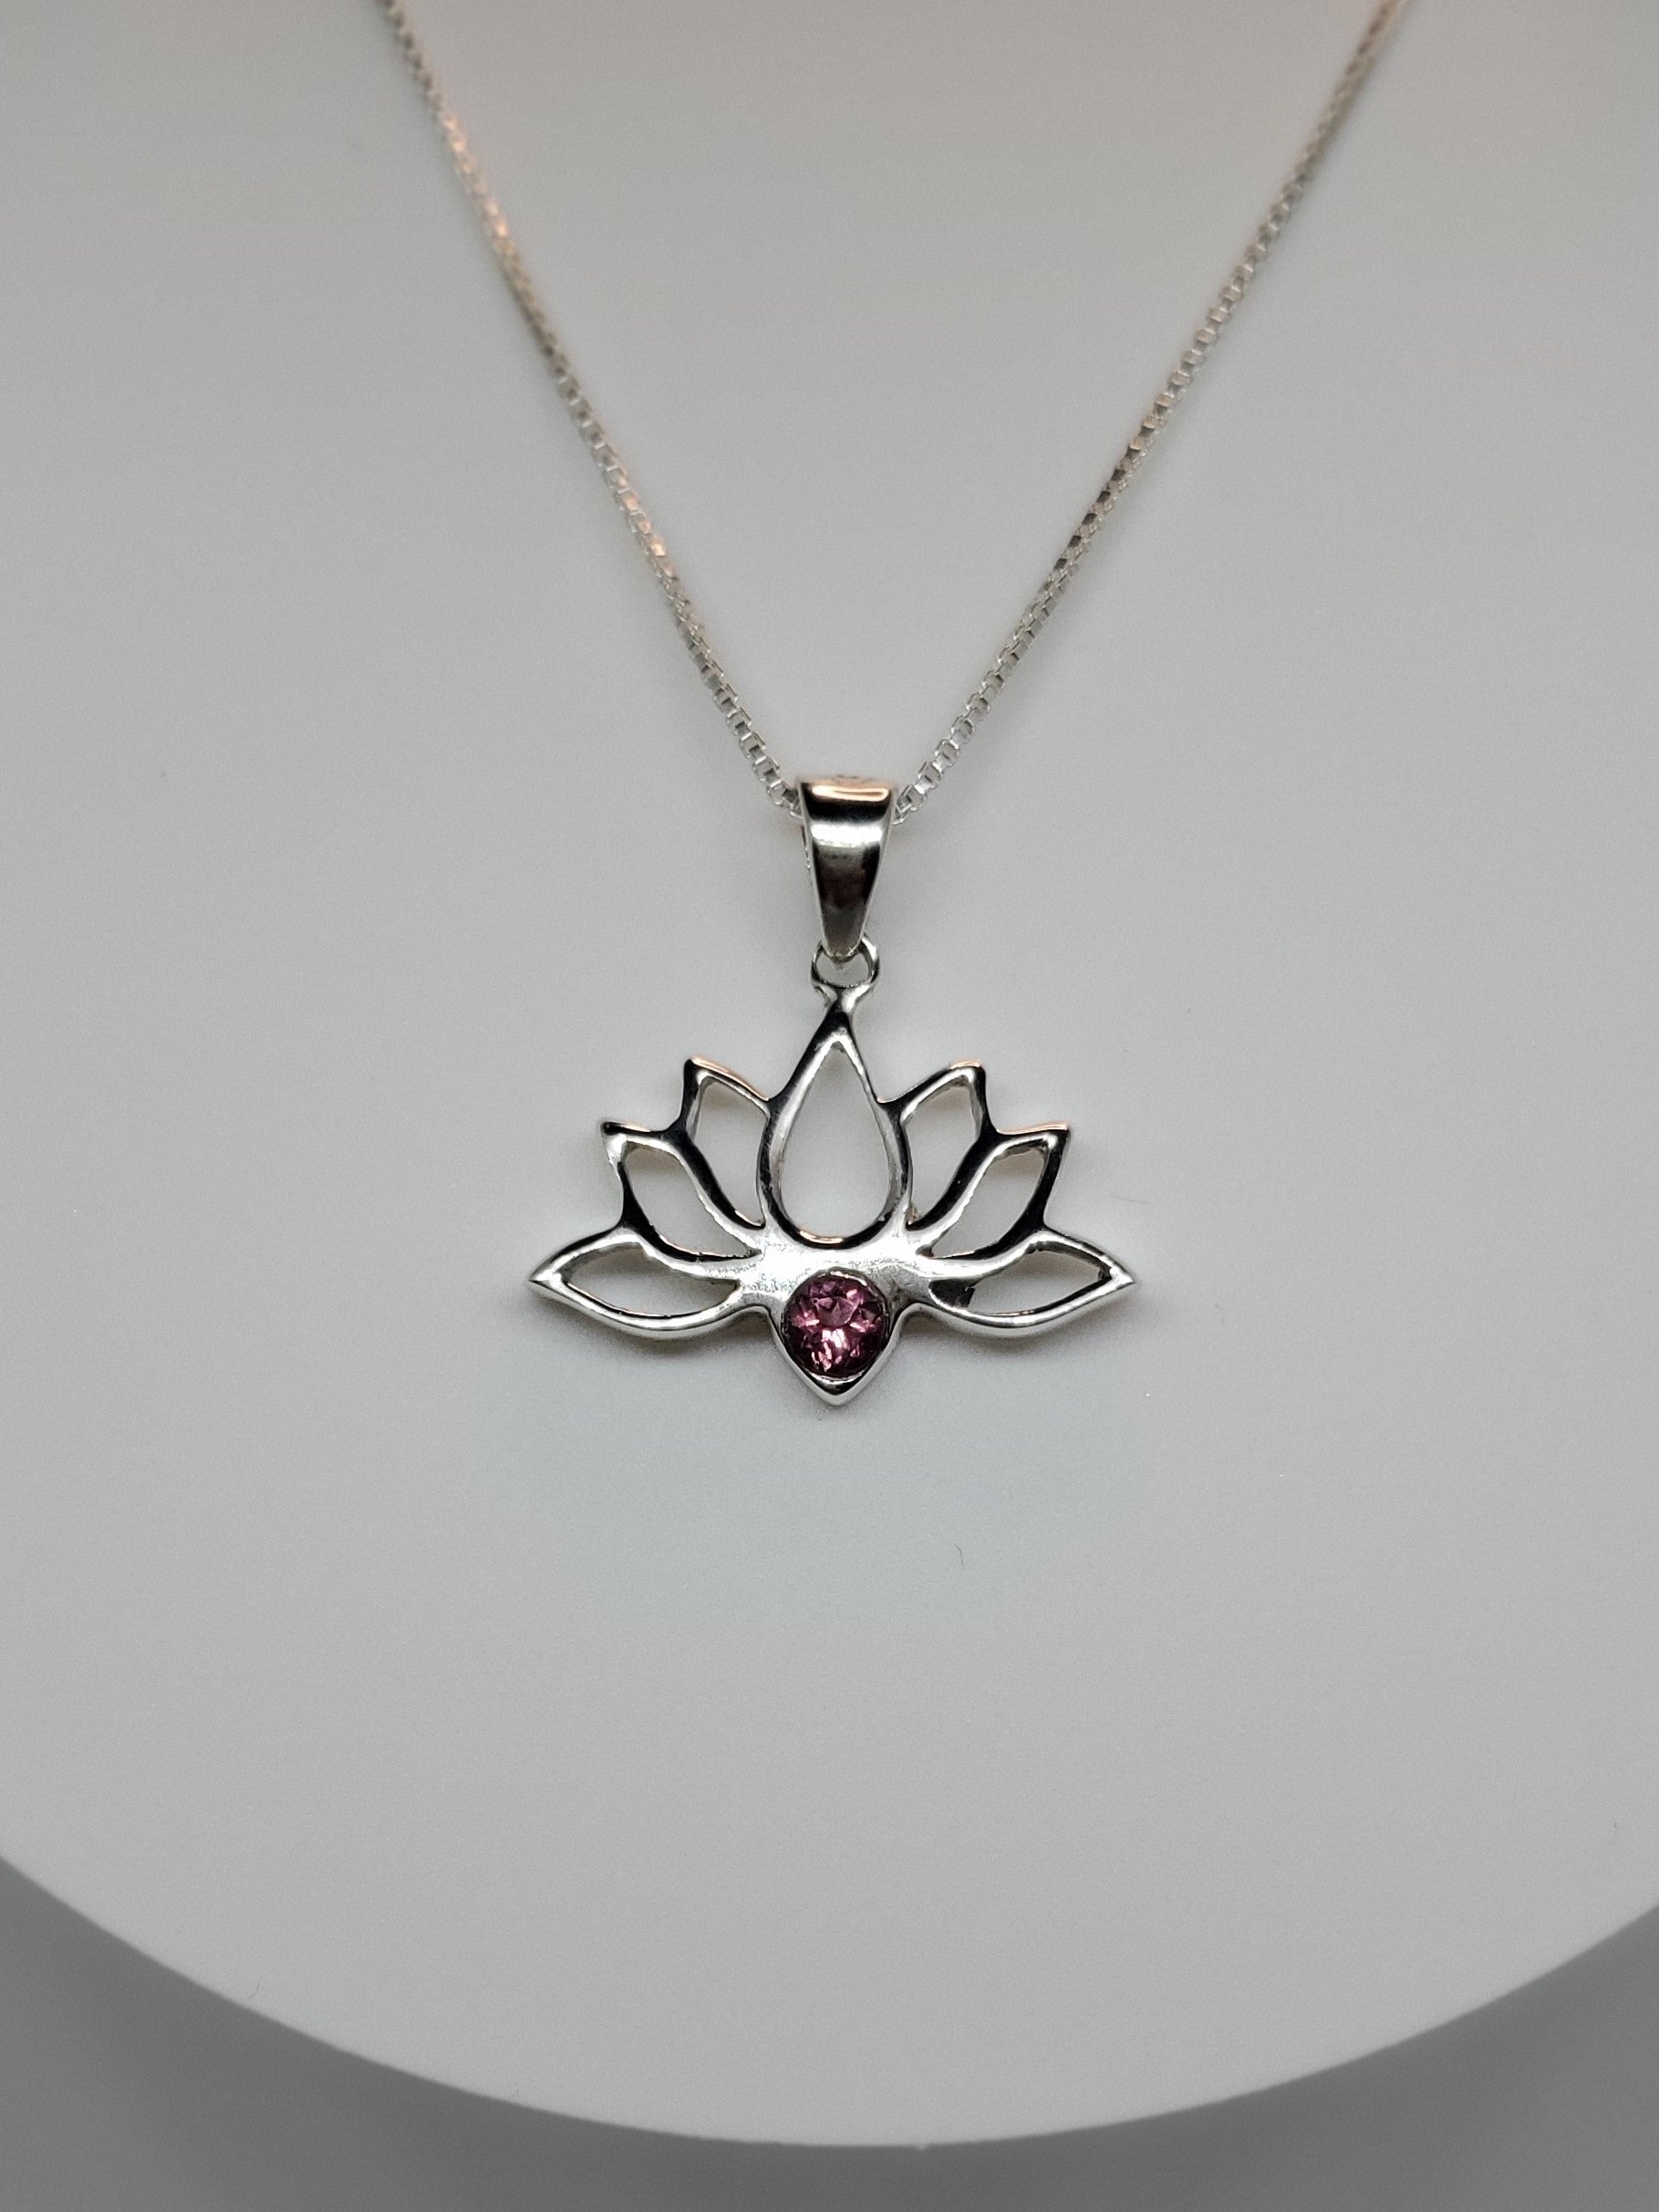 Mahalaxmi Lotus Pendant with Pink Tourmaline stone